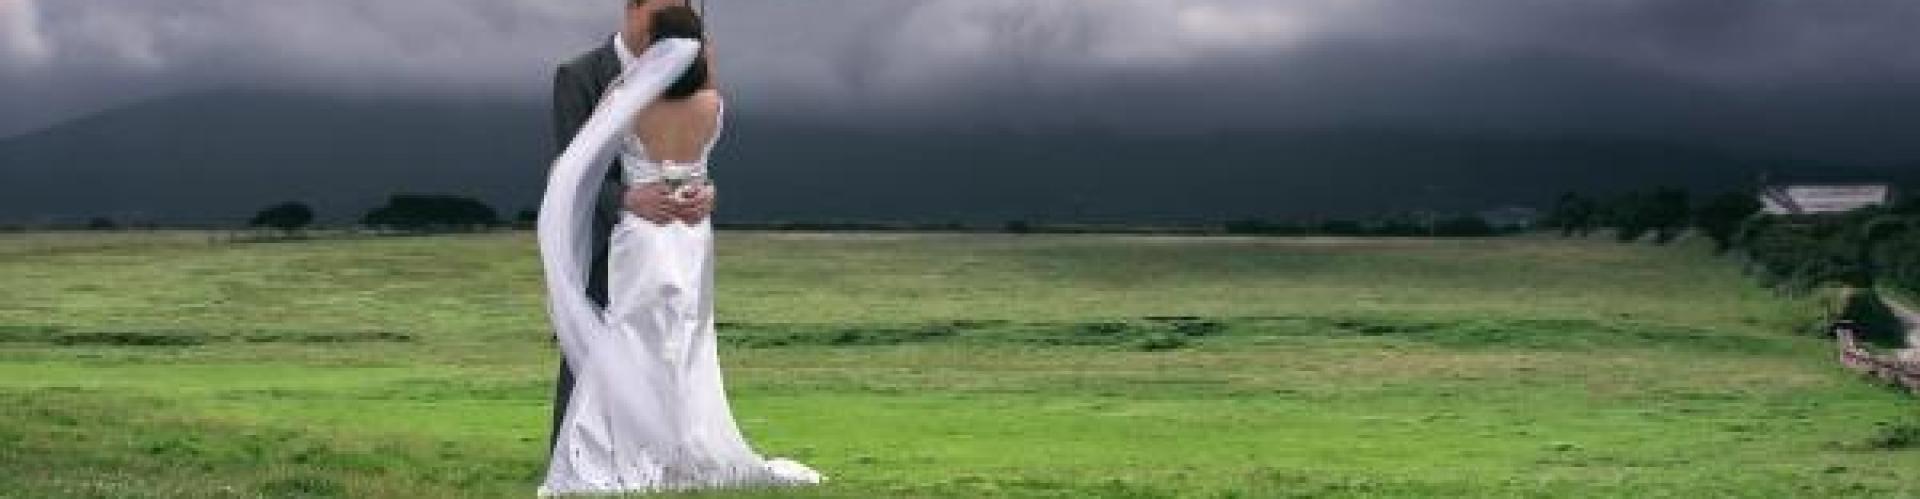 Mariages & traditions : mariage en Irlande 